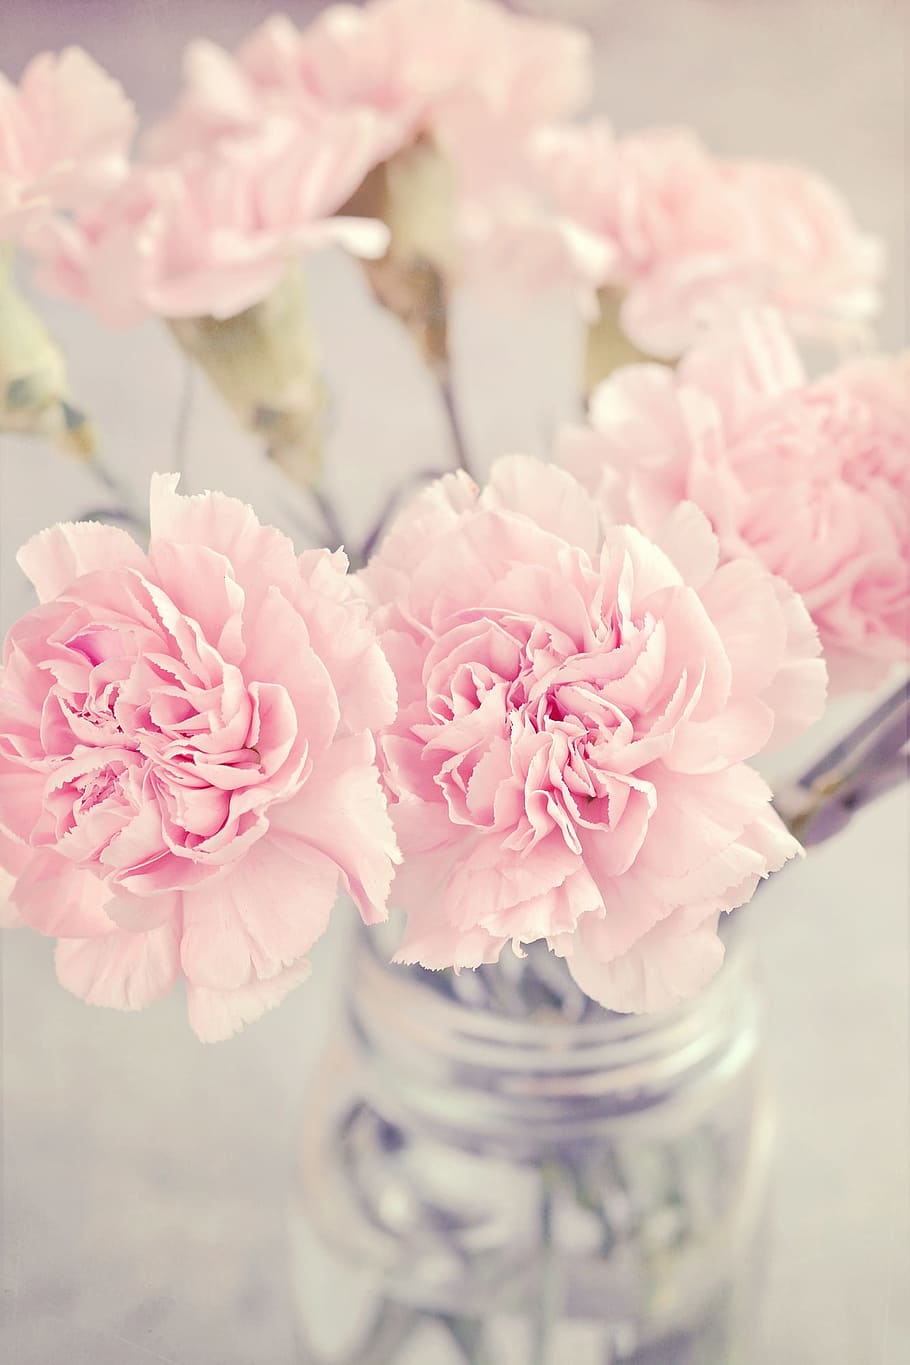 selective, focus photo, pink, peony flowers, vase, cloves, flowers, pink flowers, carnation pink, tender